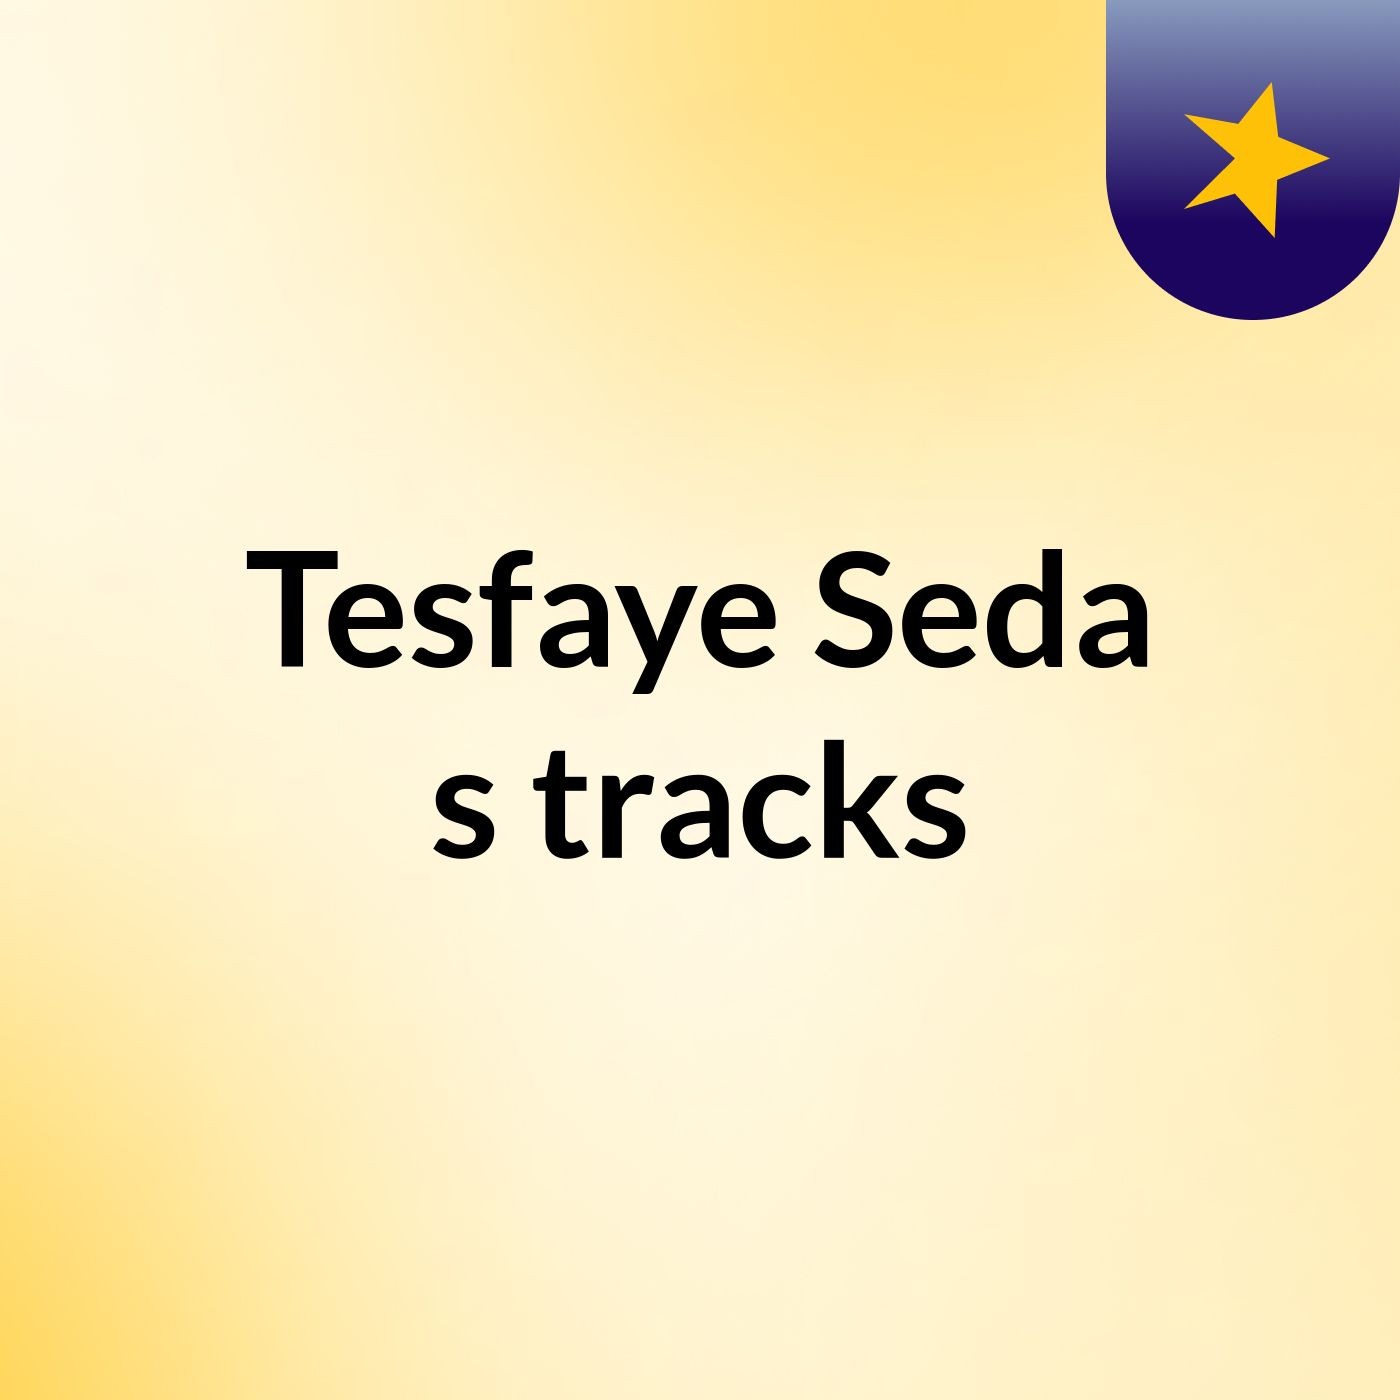 Tesfaye Seda's tracks